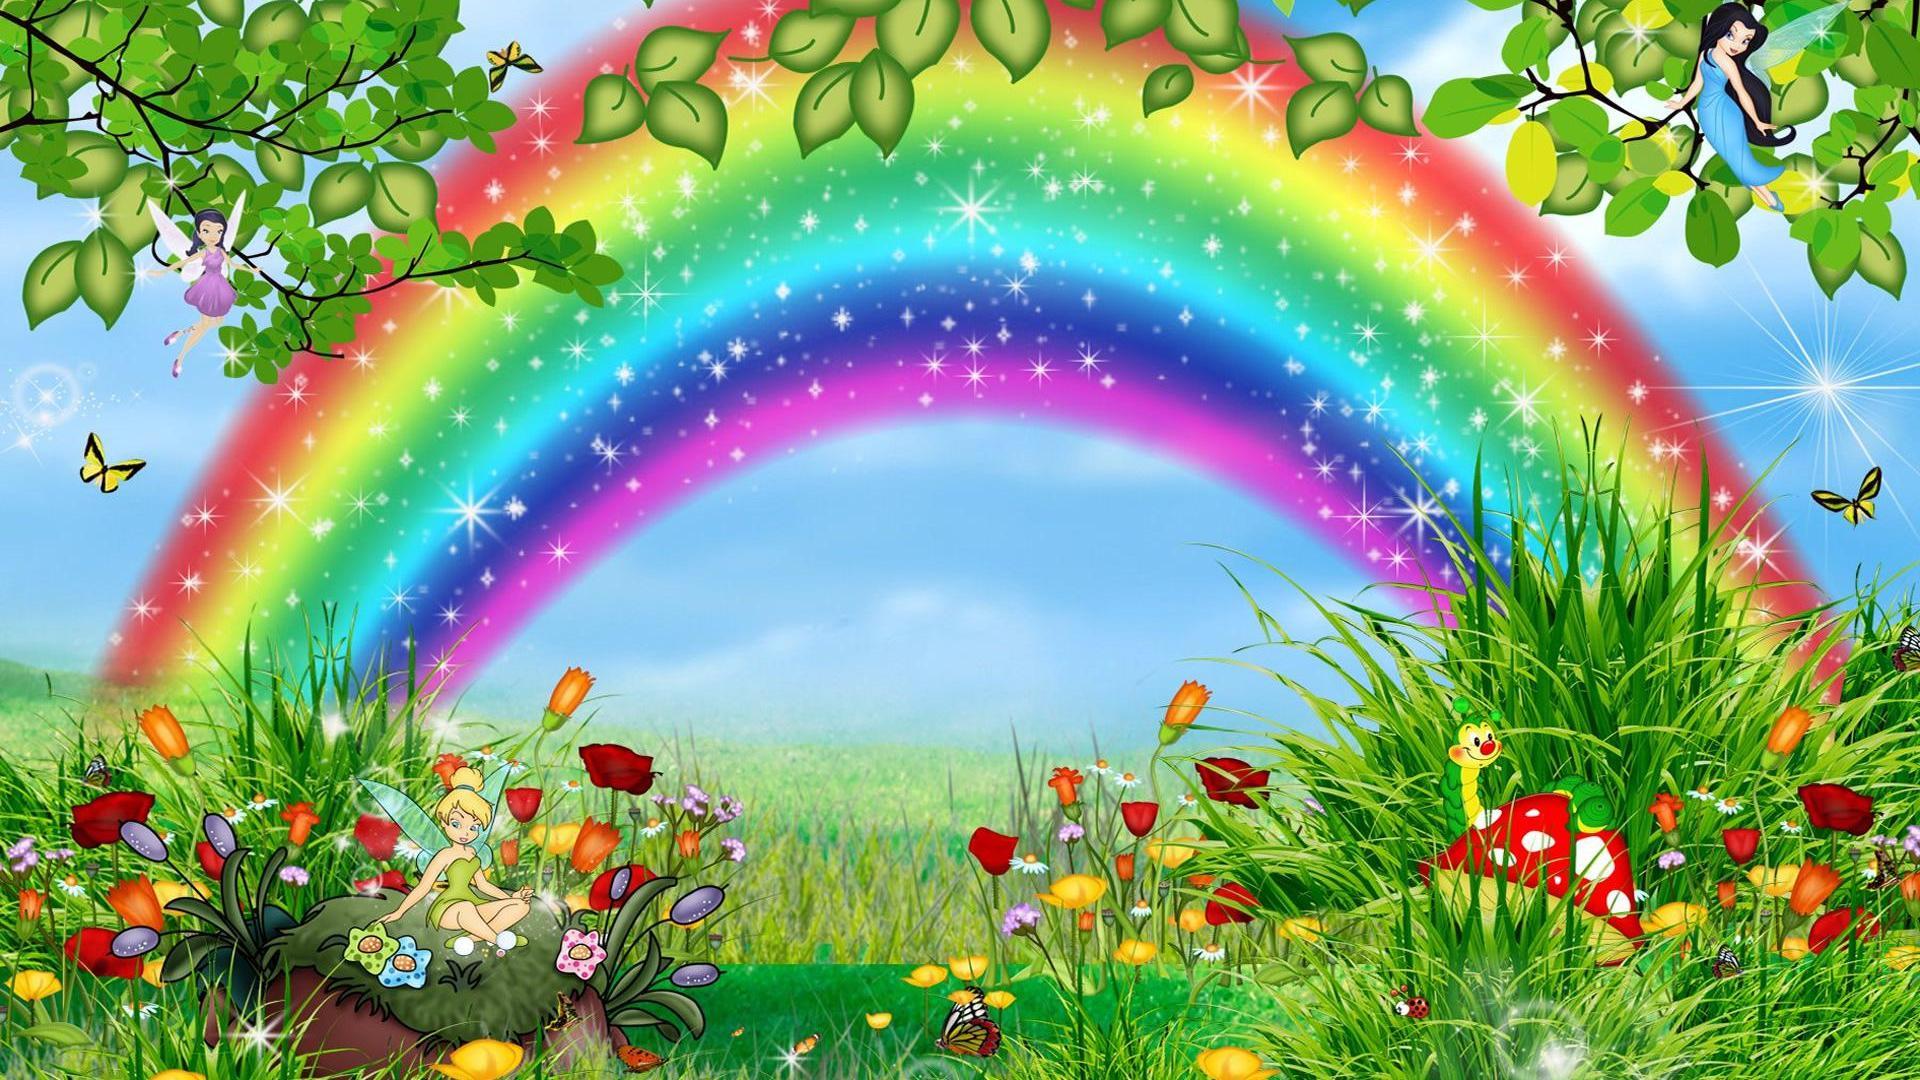 Rainbow HD Wallpaper, High Definition, High Quality